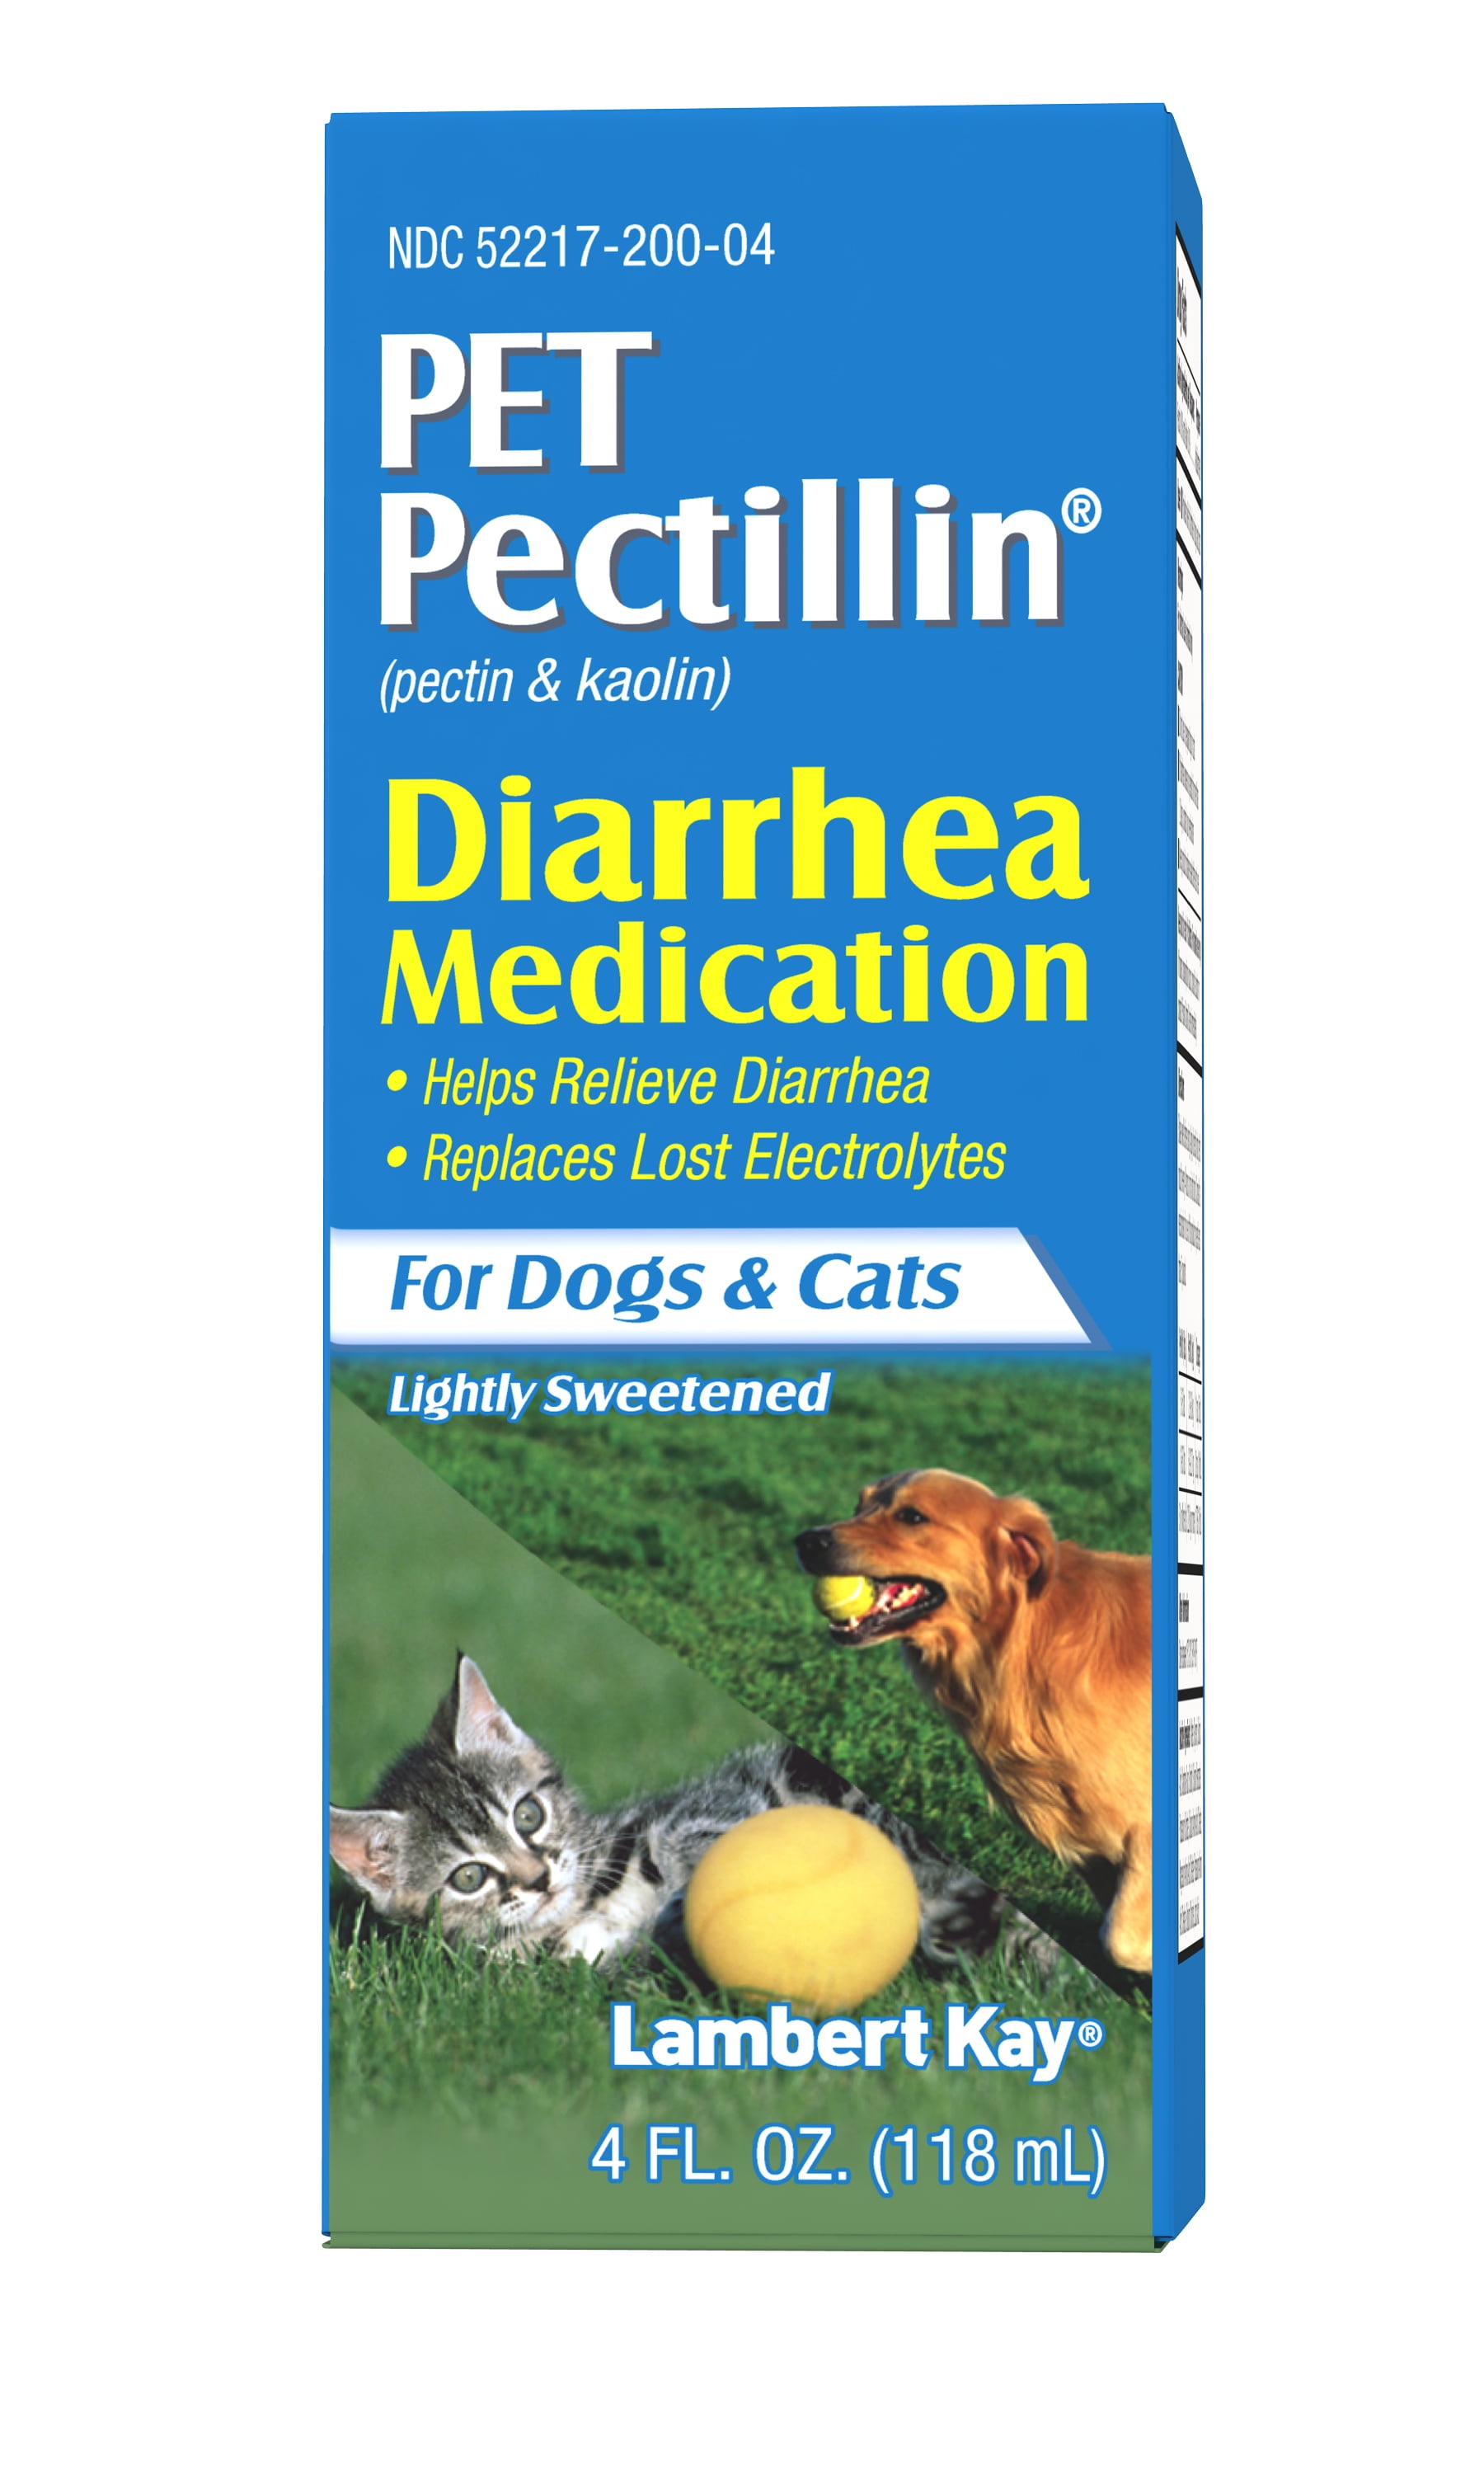 over the counter diarrhea medicine for dogs